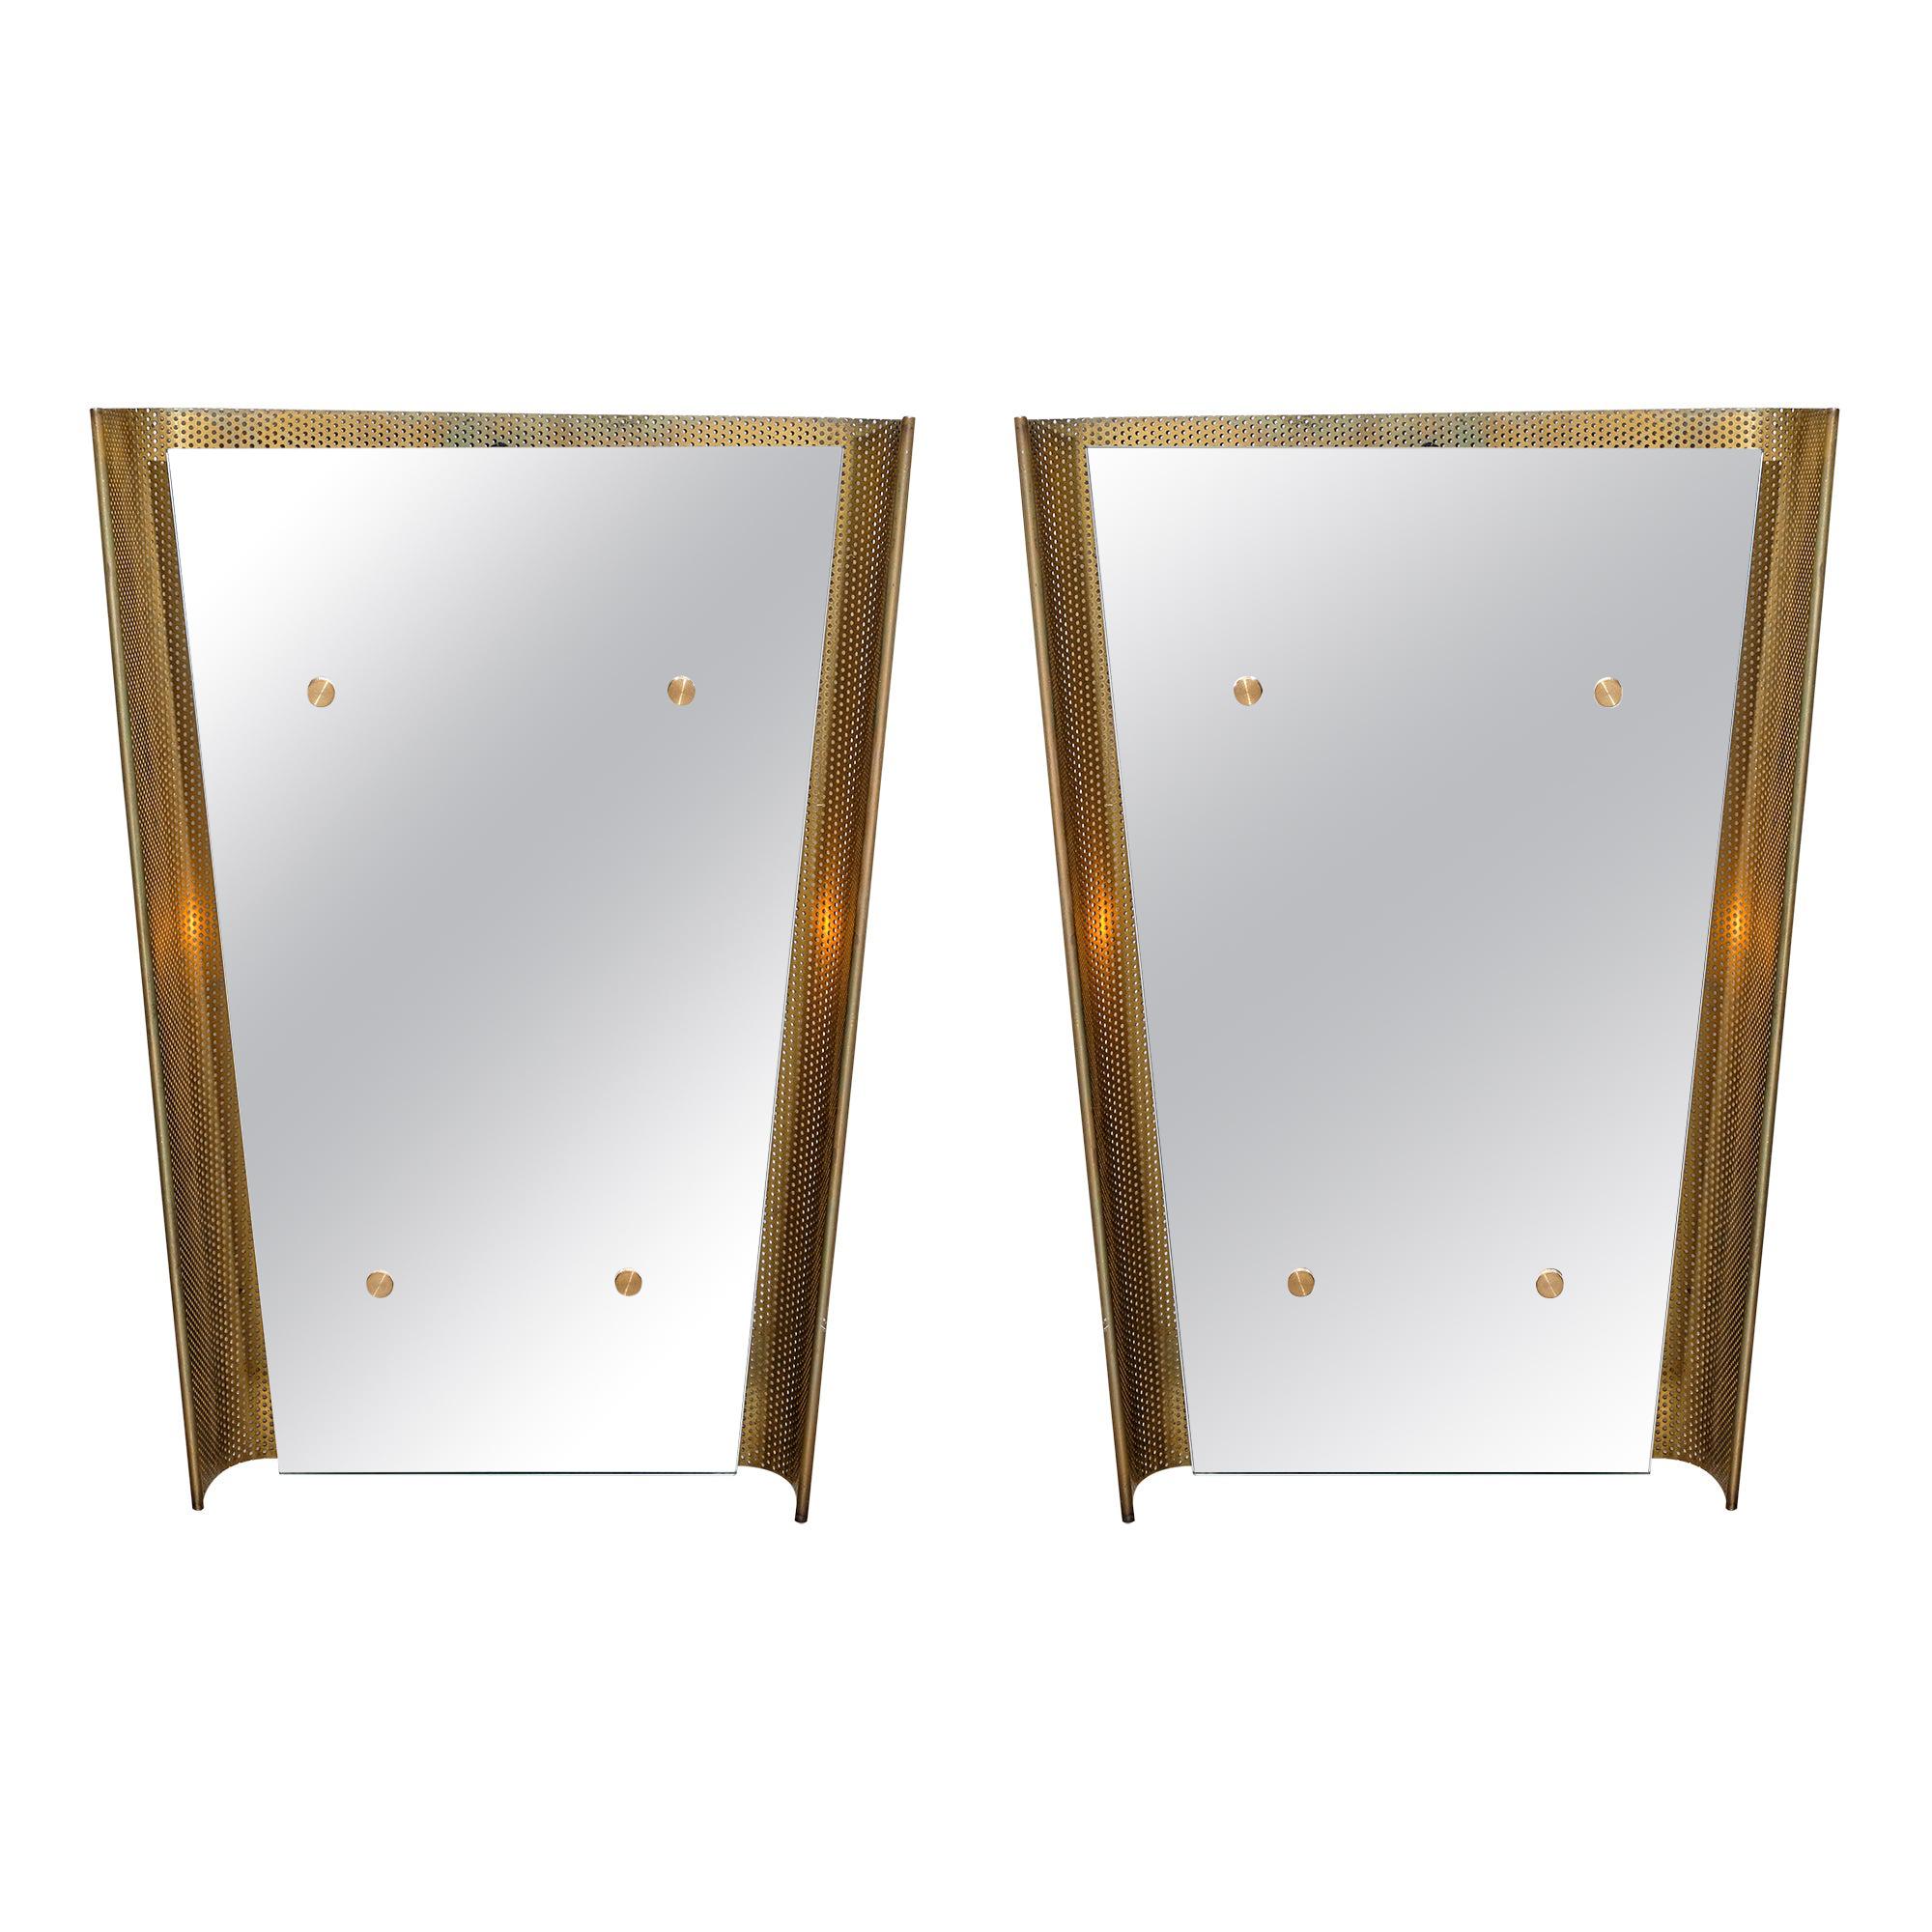 Midcentury Italian Pair of Mirrors with Backlighting